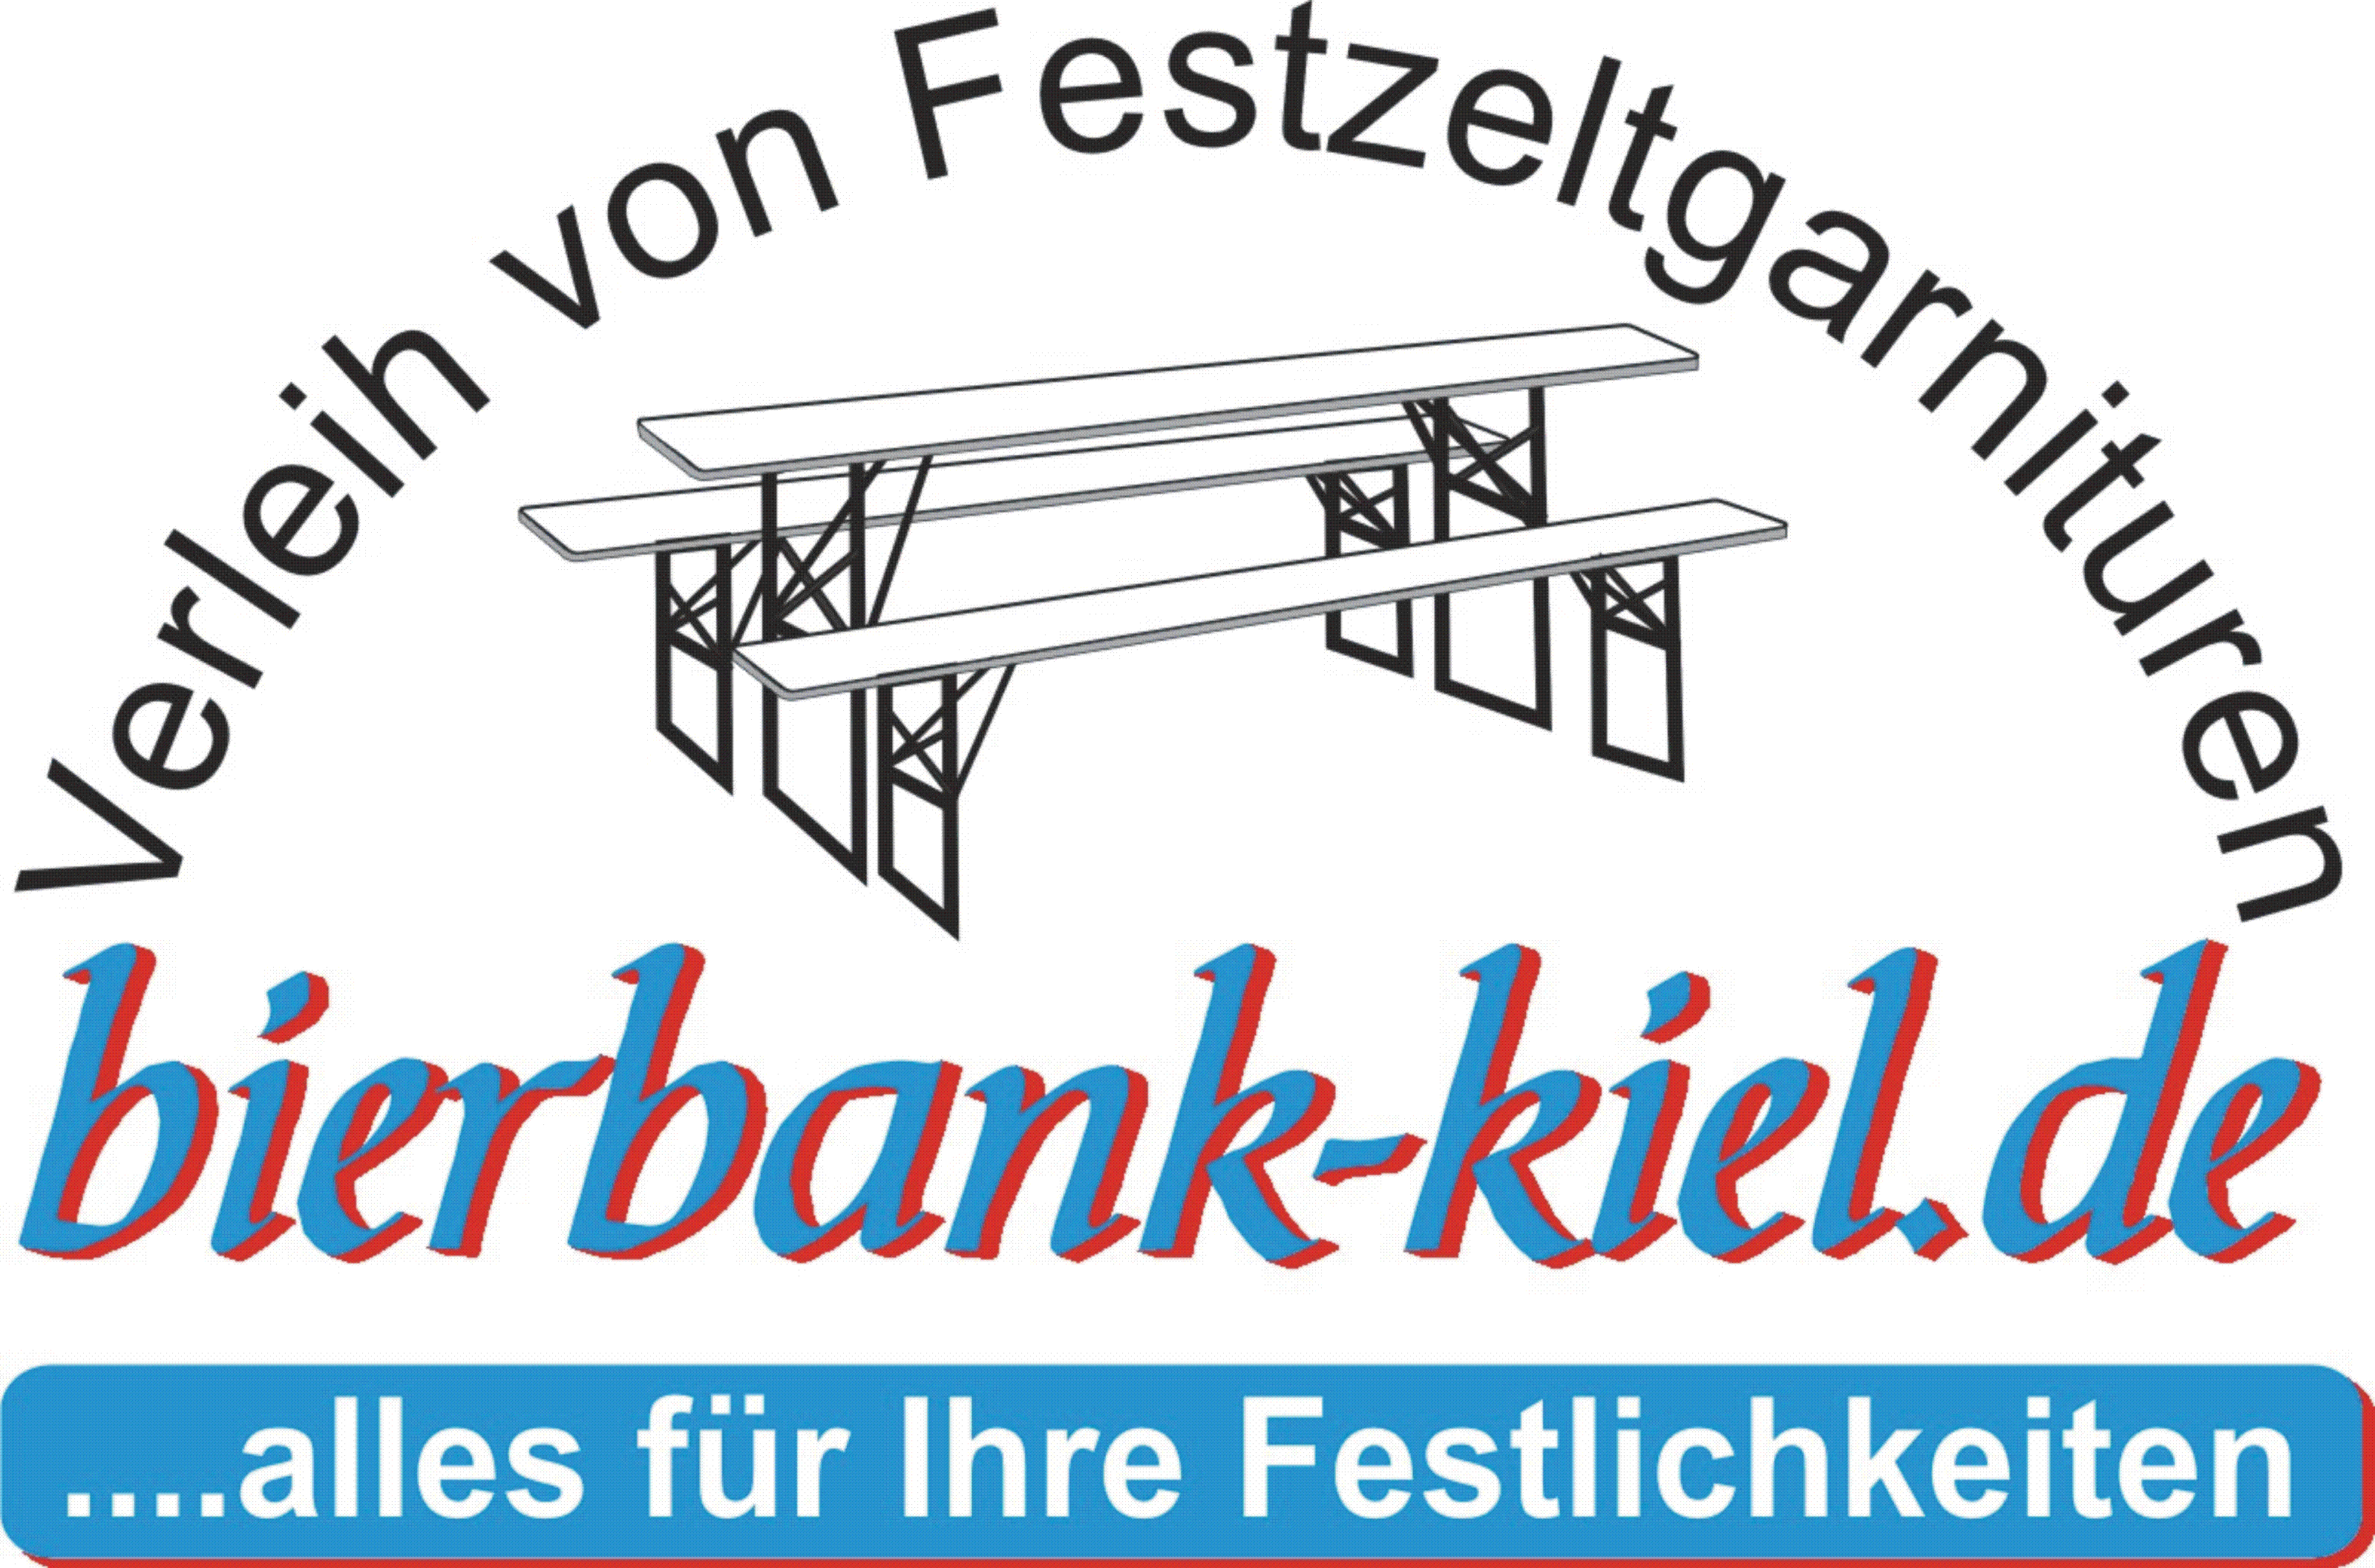 (c) Bierbank-kiel.de